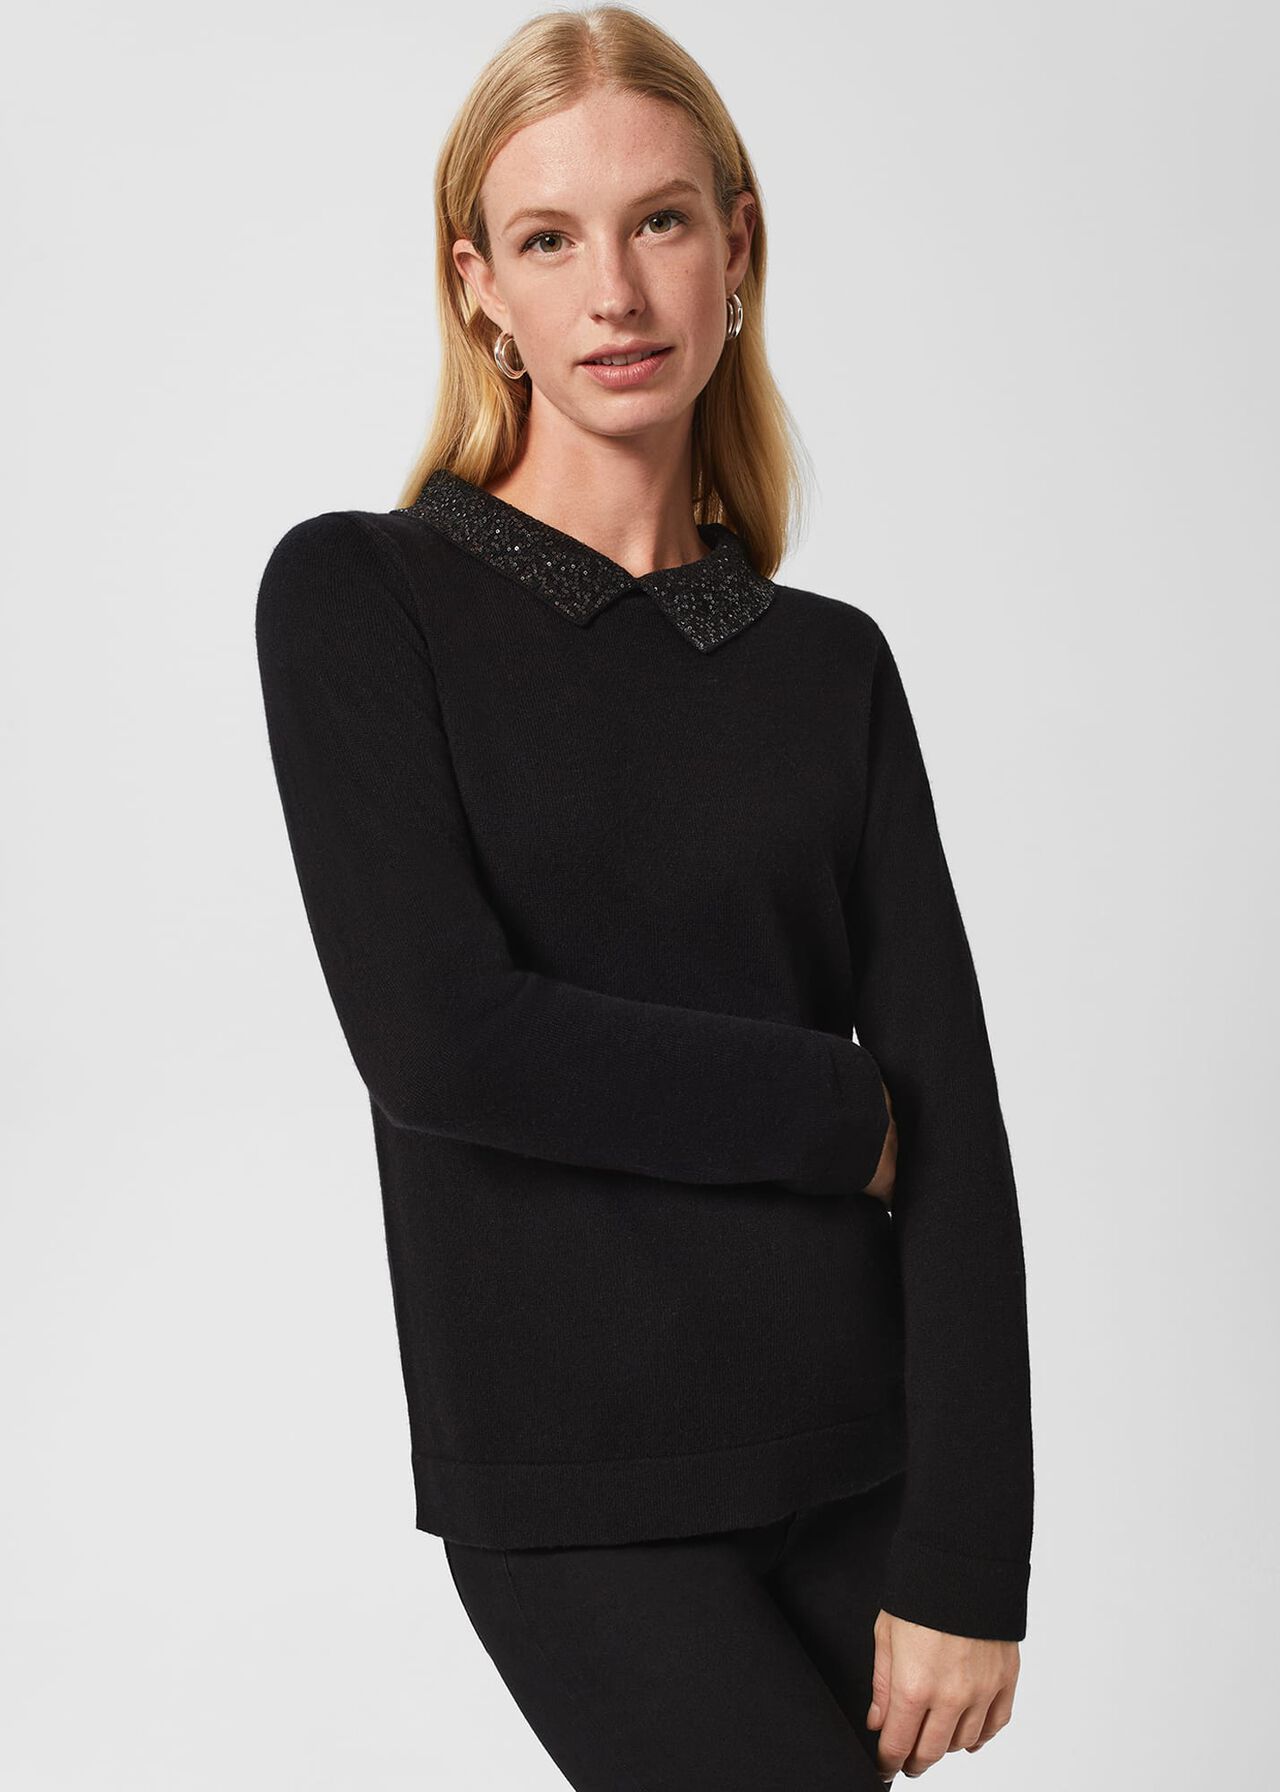 Priya Sequin Wool Cashmere Sweater, Black, hi-res